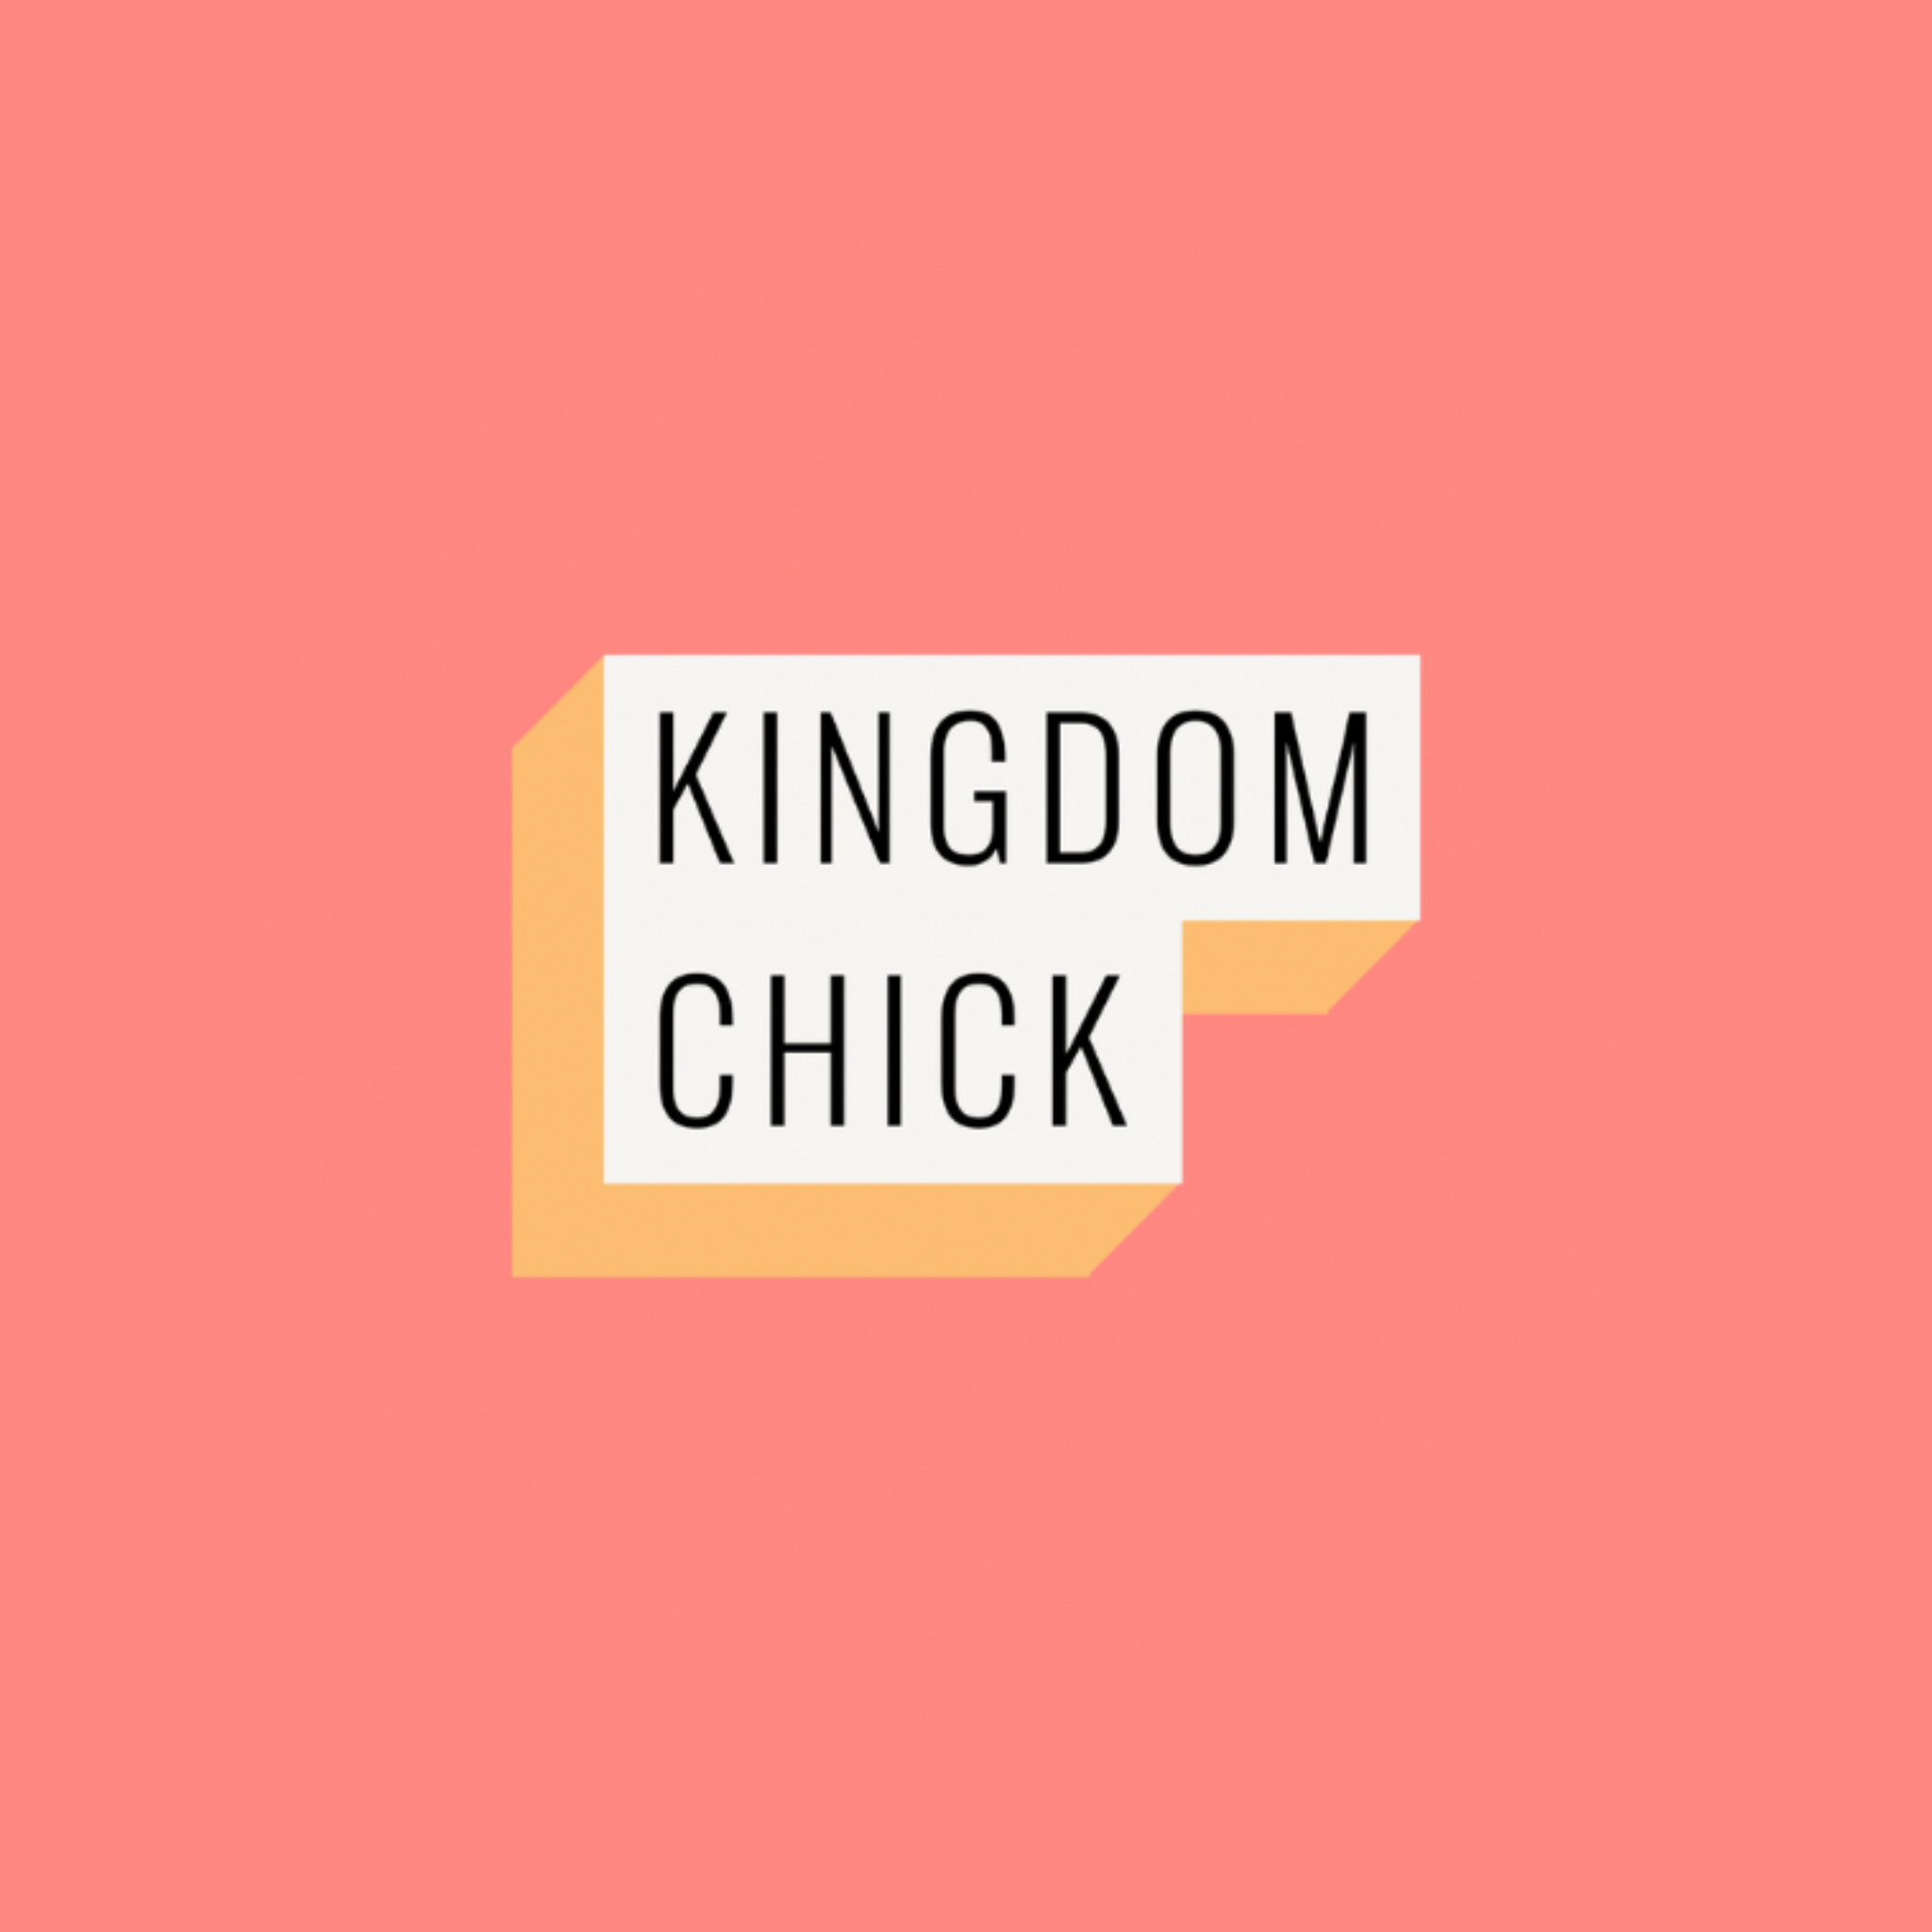 Kingdom Chick Inc.